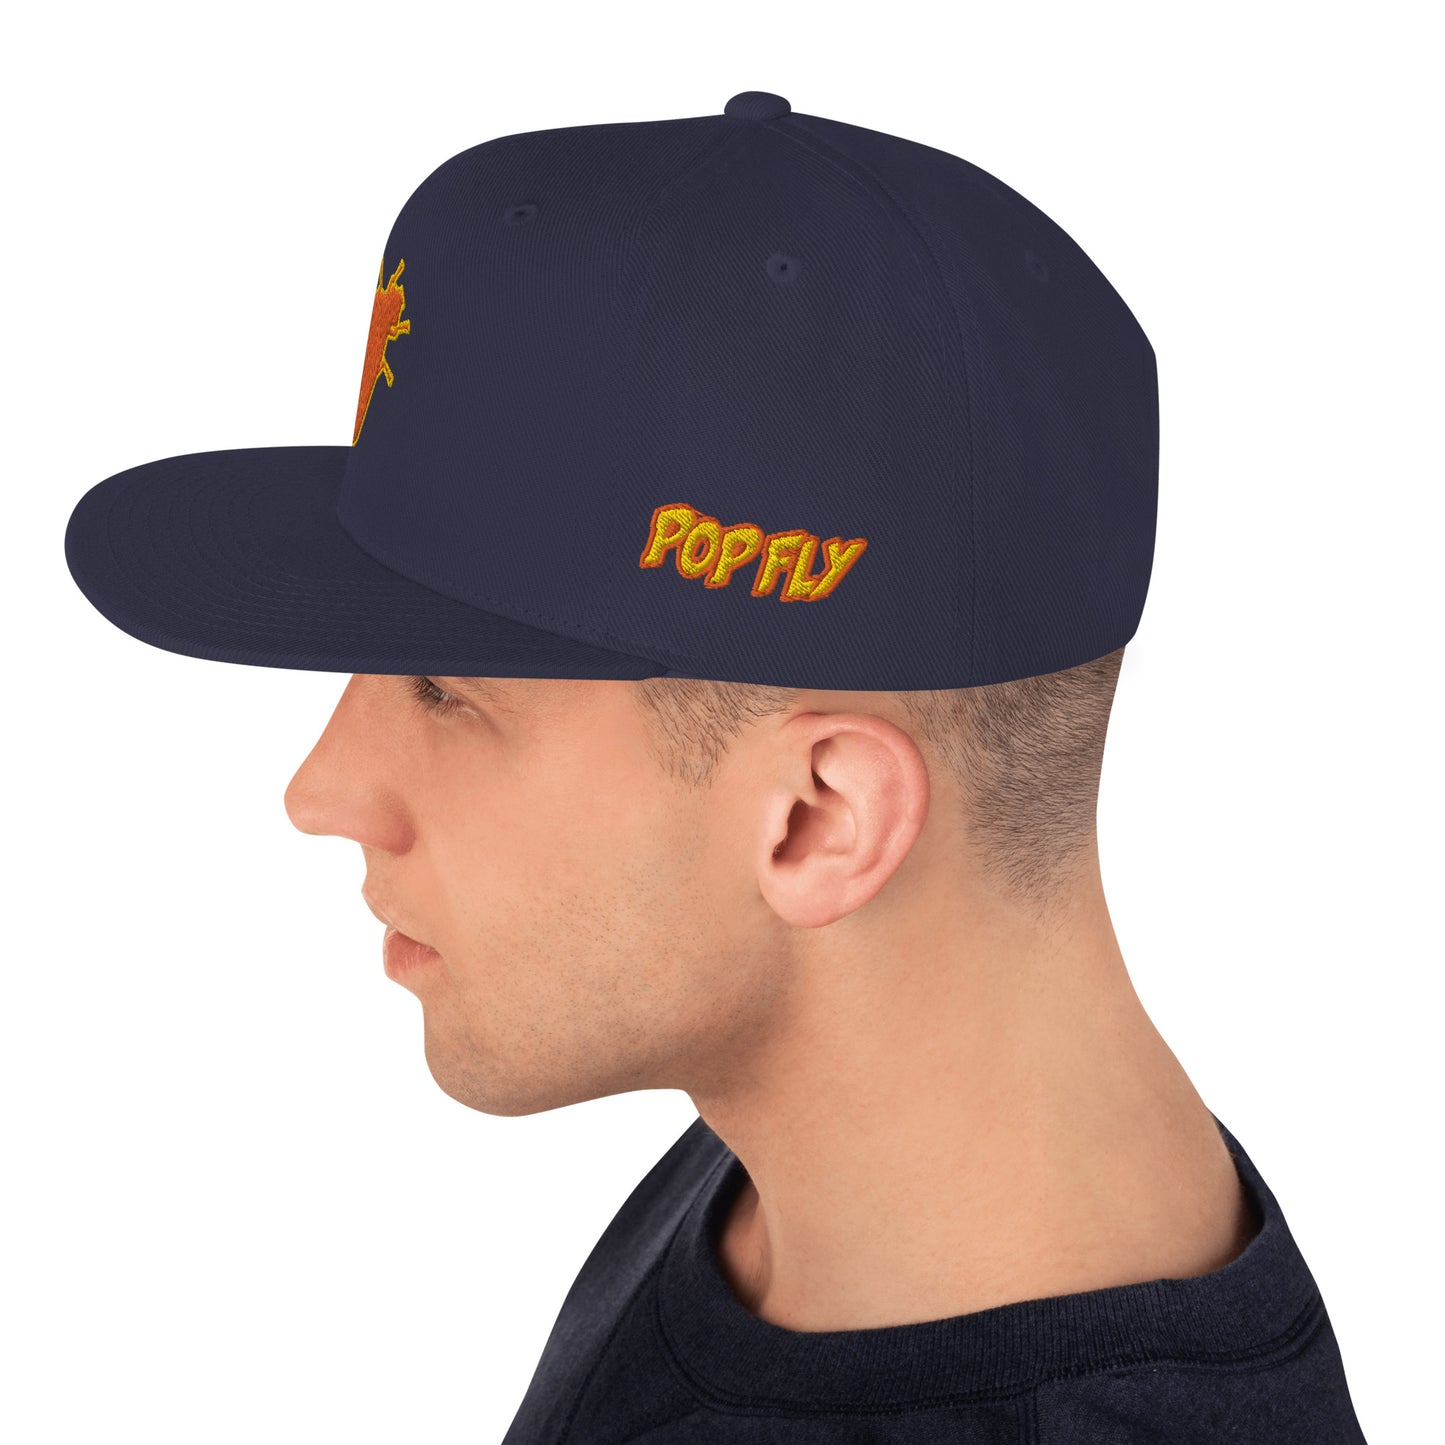 Codebreaker Pop Fly Hat